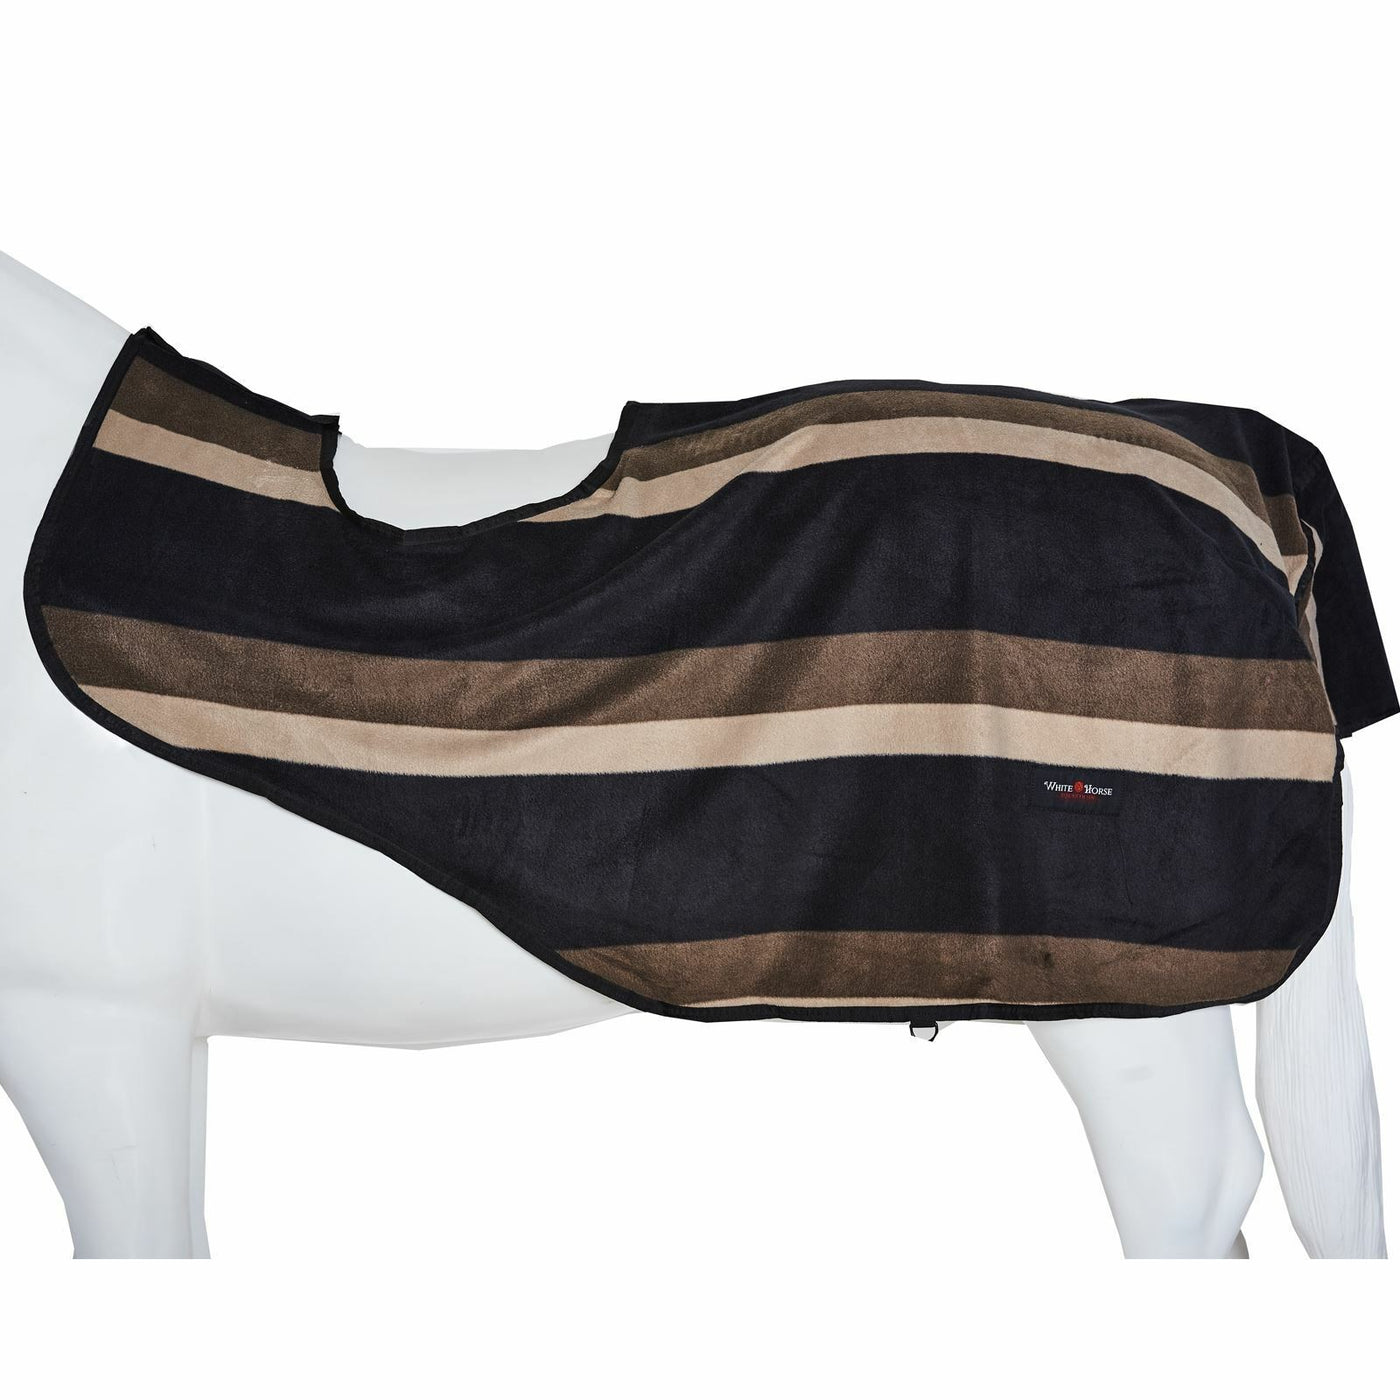 Horse Masters Stripped Black/Beige Exercise Quarter Sheet